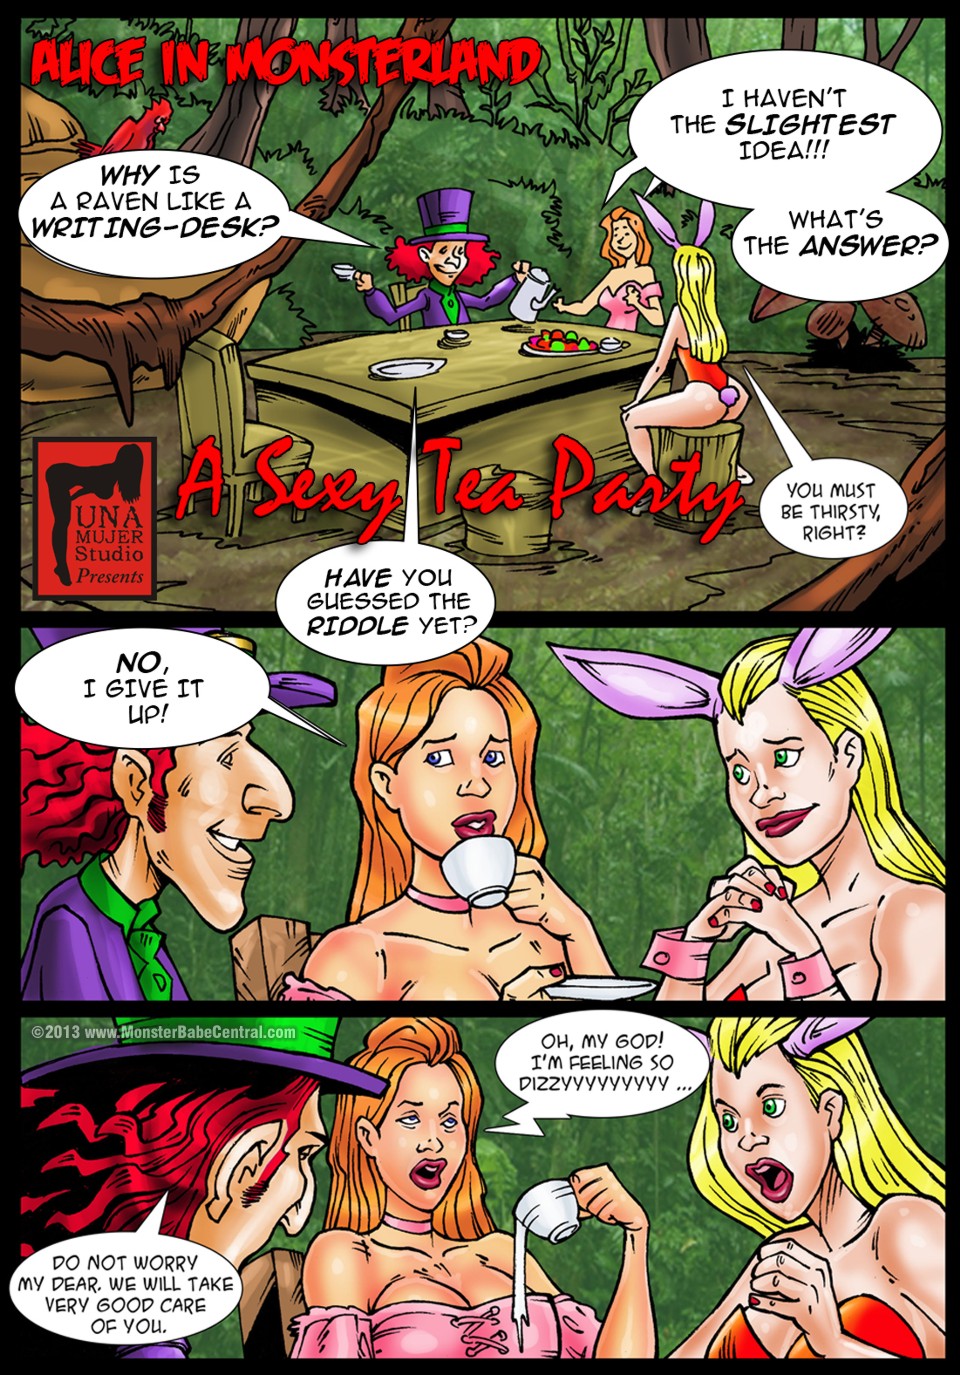 SureFap xxx porno Alice in Wonderland - [MonsterBabeCentral] - Alice in Monsterland 04 - A Saxy Tea Party